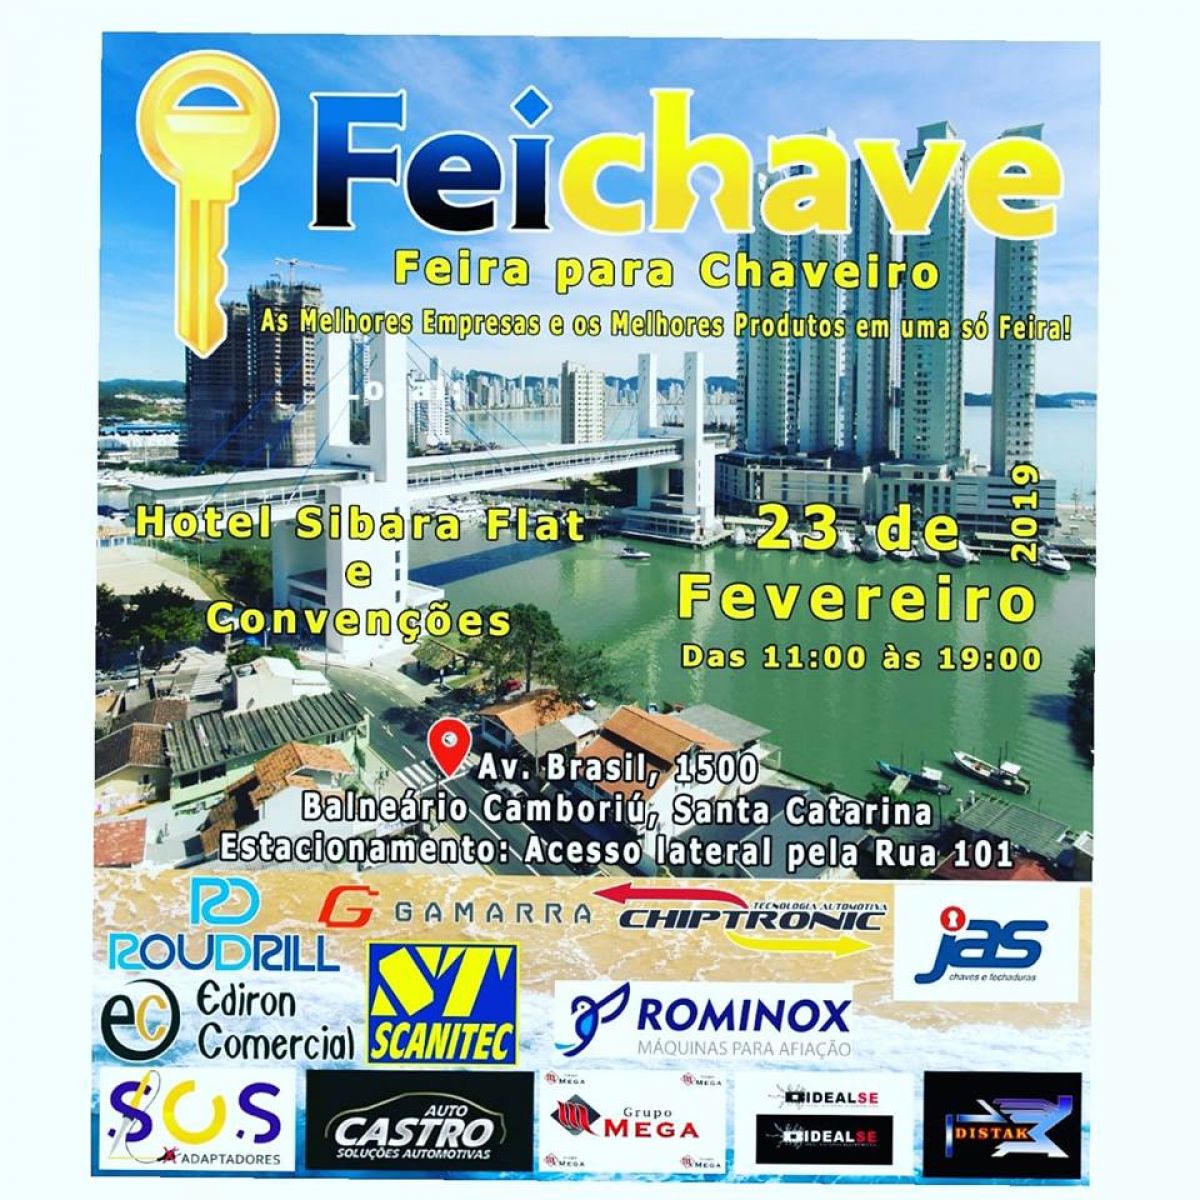 FEICHAVE - FEIRA PARA CHAVEIRO